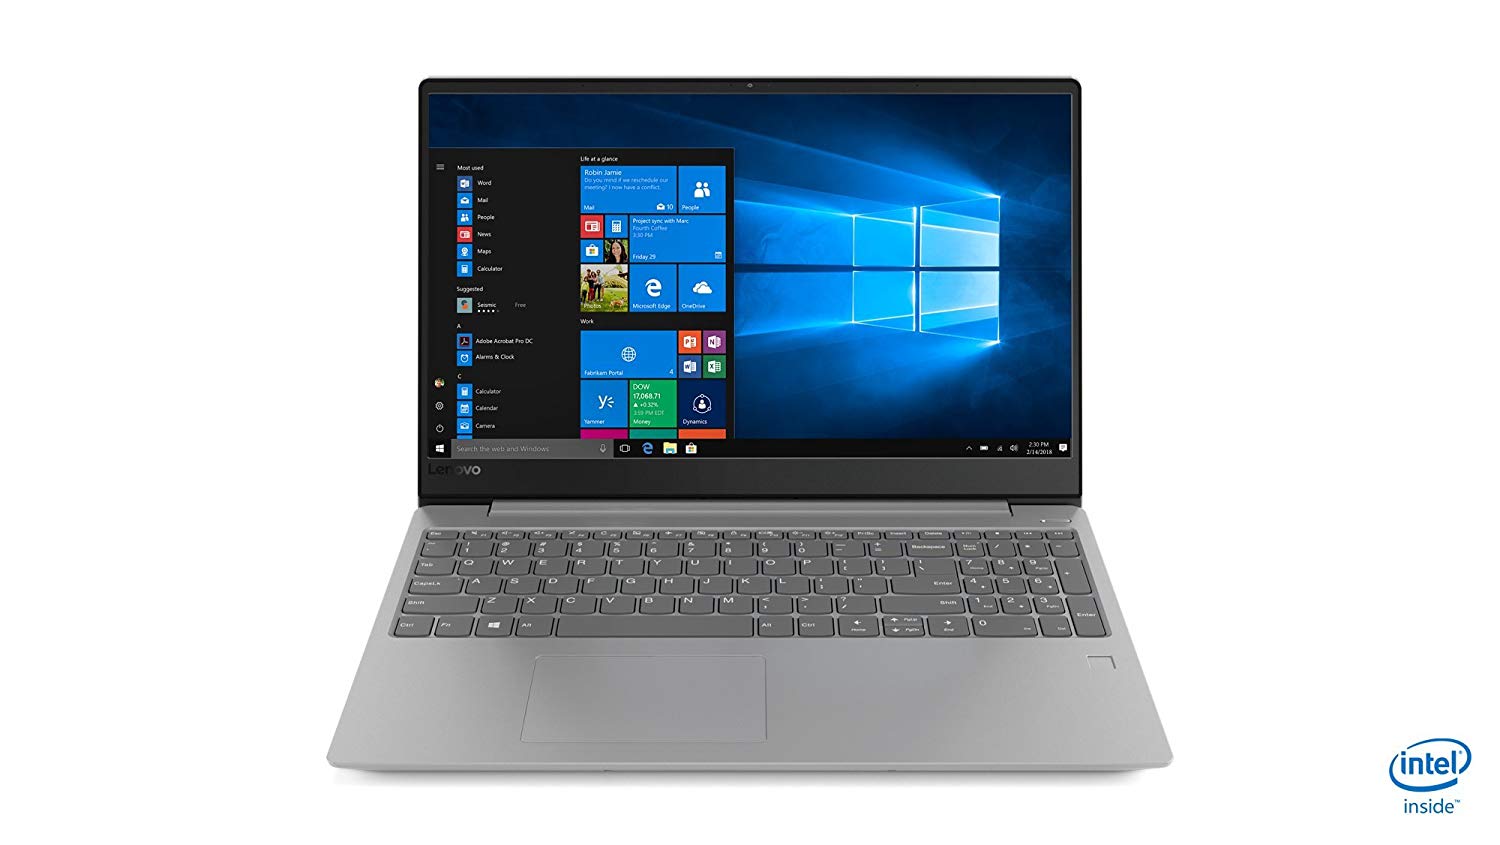 Lenovo ideapad 330S 81F500GMIN 15.6-inch Laptop (I5-8250U/4GB/1TB/Windows 10 Home/4GB Graphics), Platinum Grey